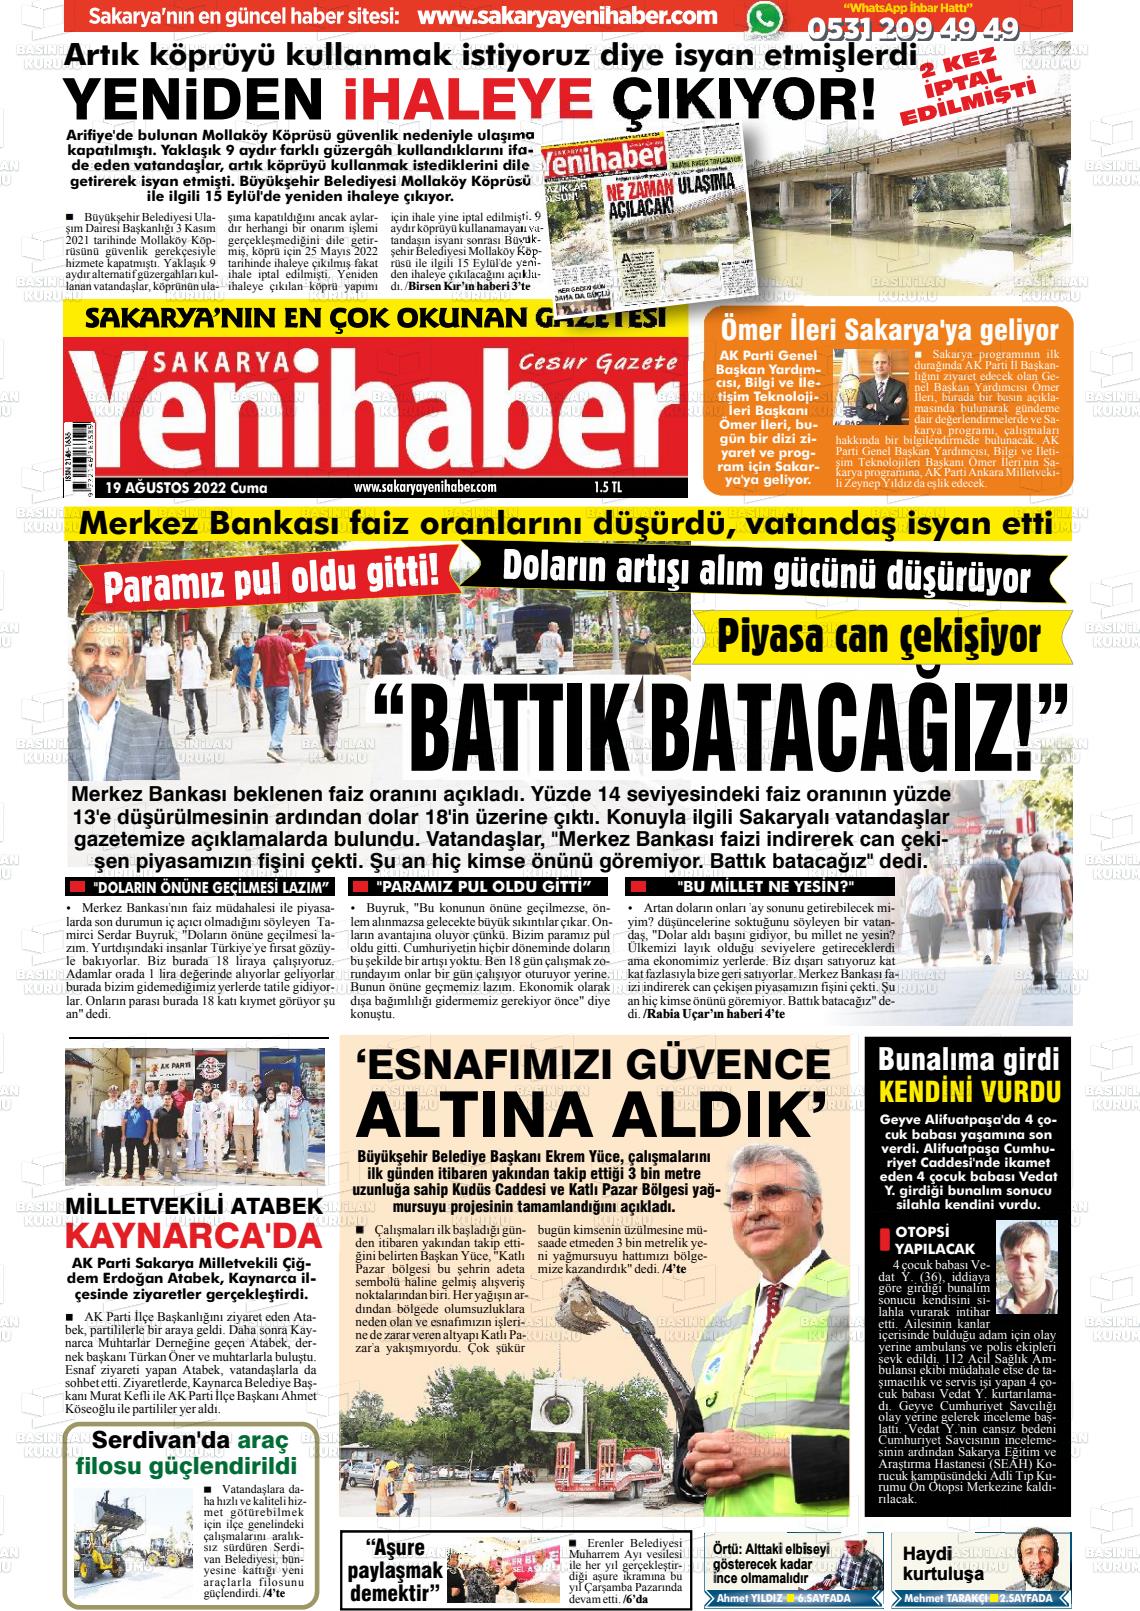 19 Ağustos 2022 Sakarya Yeni Haber Gazete Manşeti